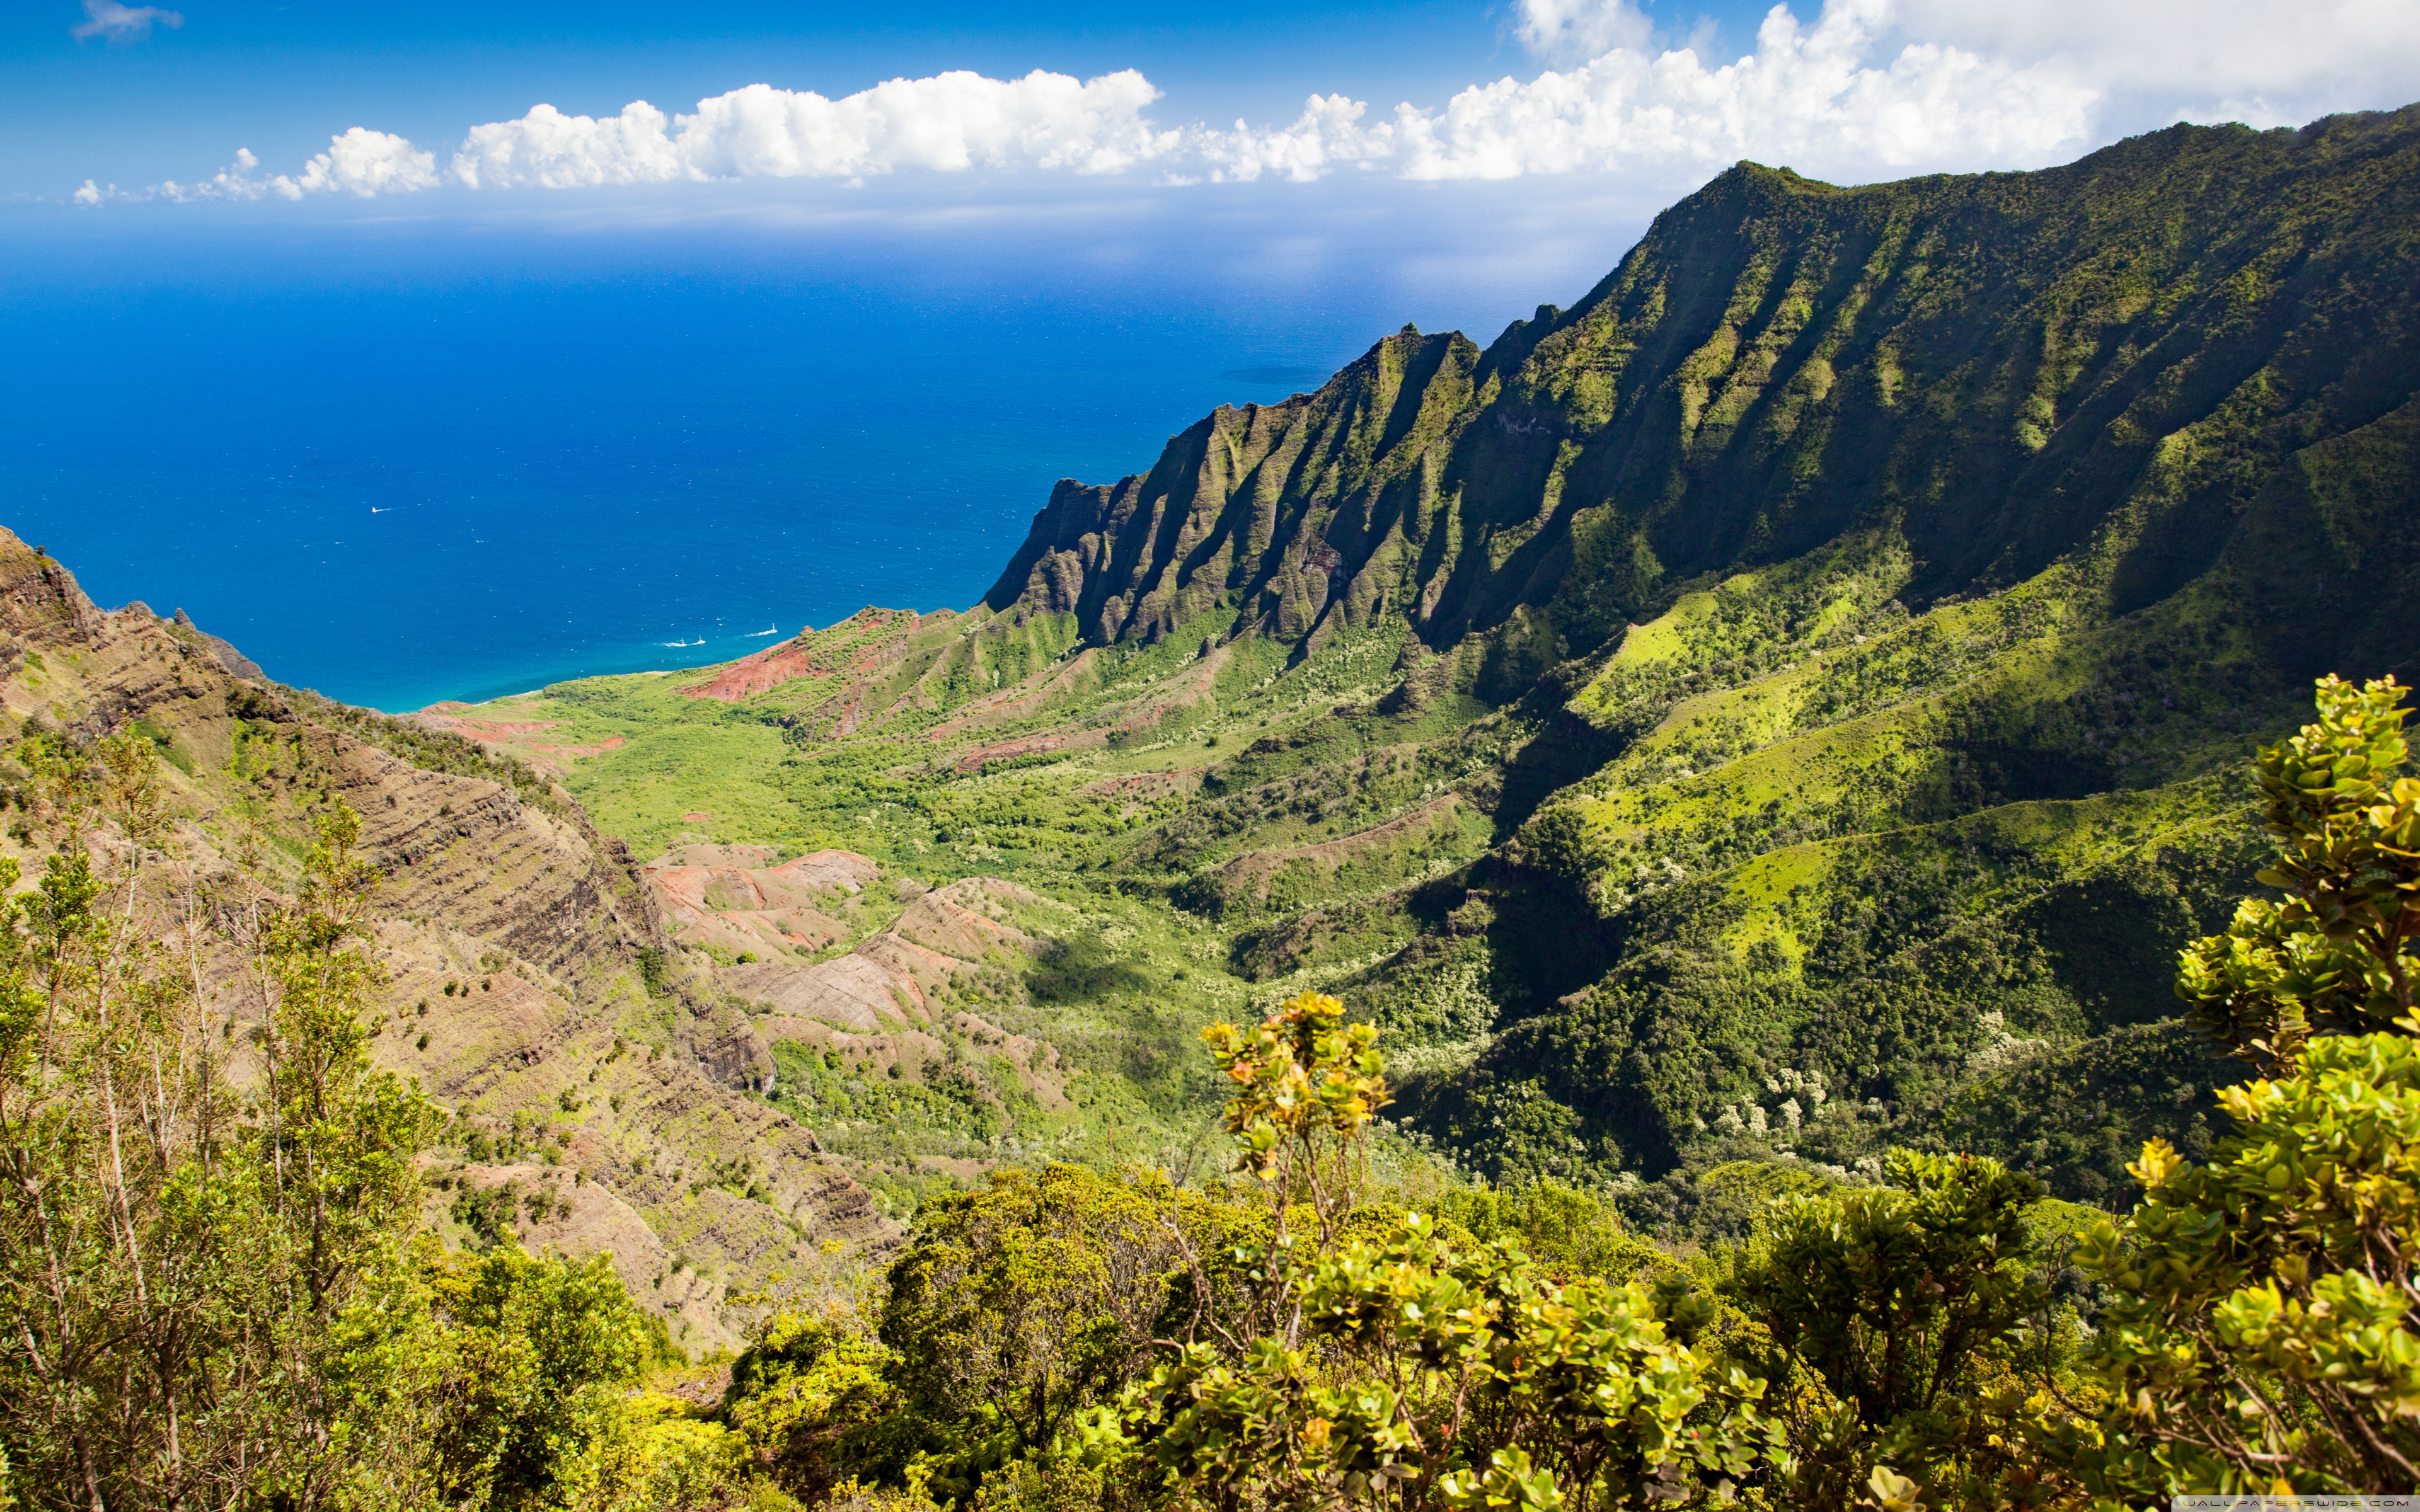 Download 21 jurassic-background Kauai-Jurassic-Park-Na-Pali-Kalalau-Lookout-Hawaii-.jpg